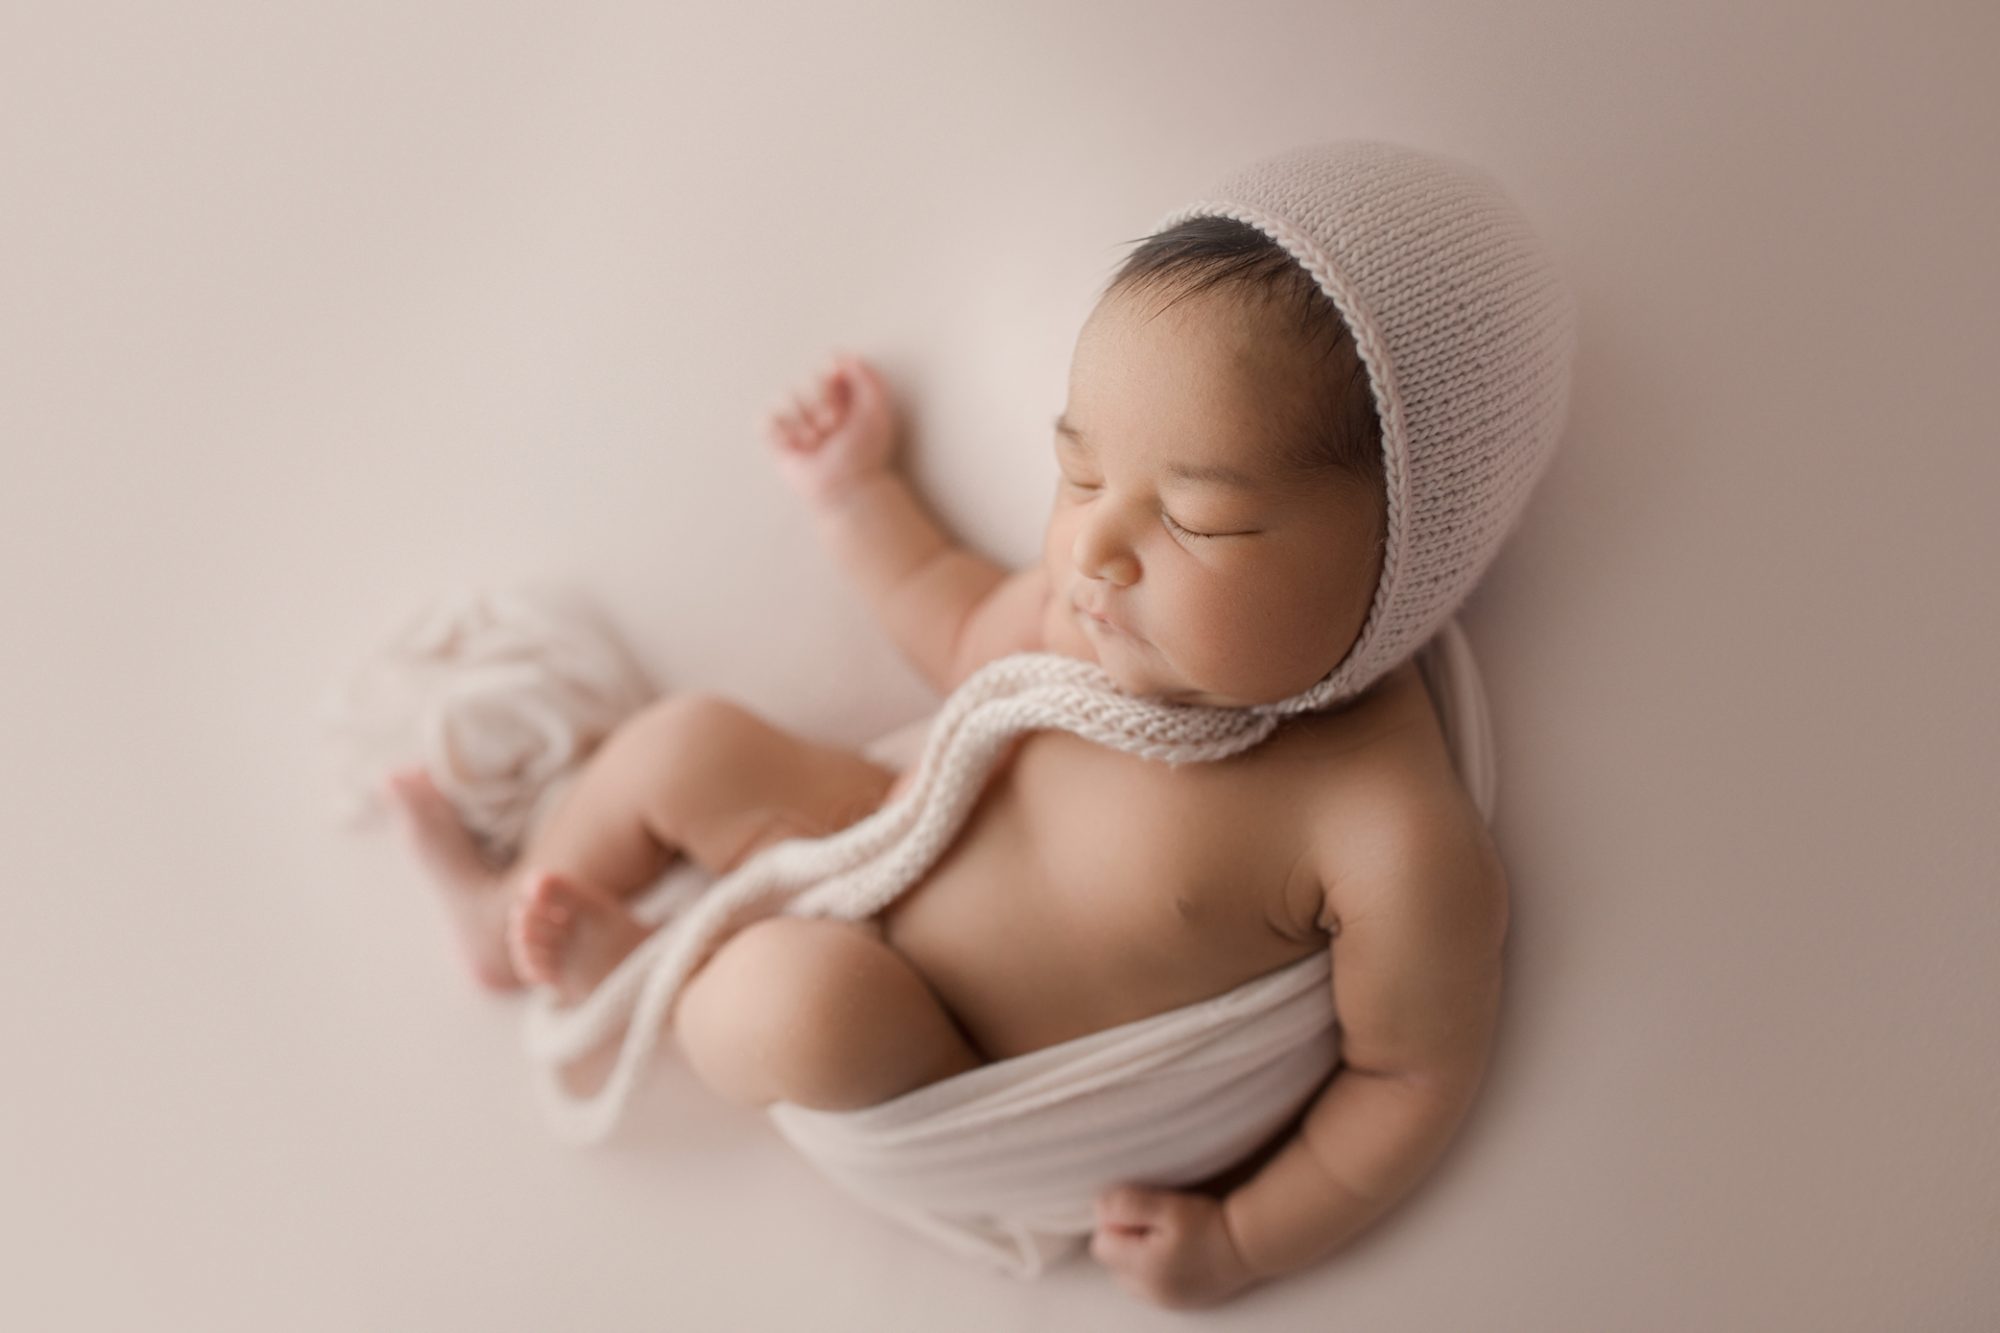 puyallup newborn photographer | baby photography tacoma